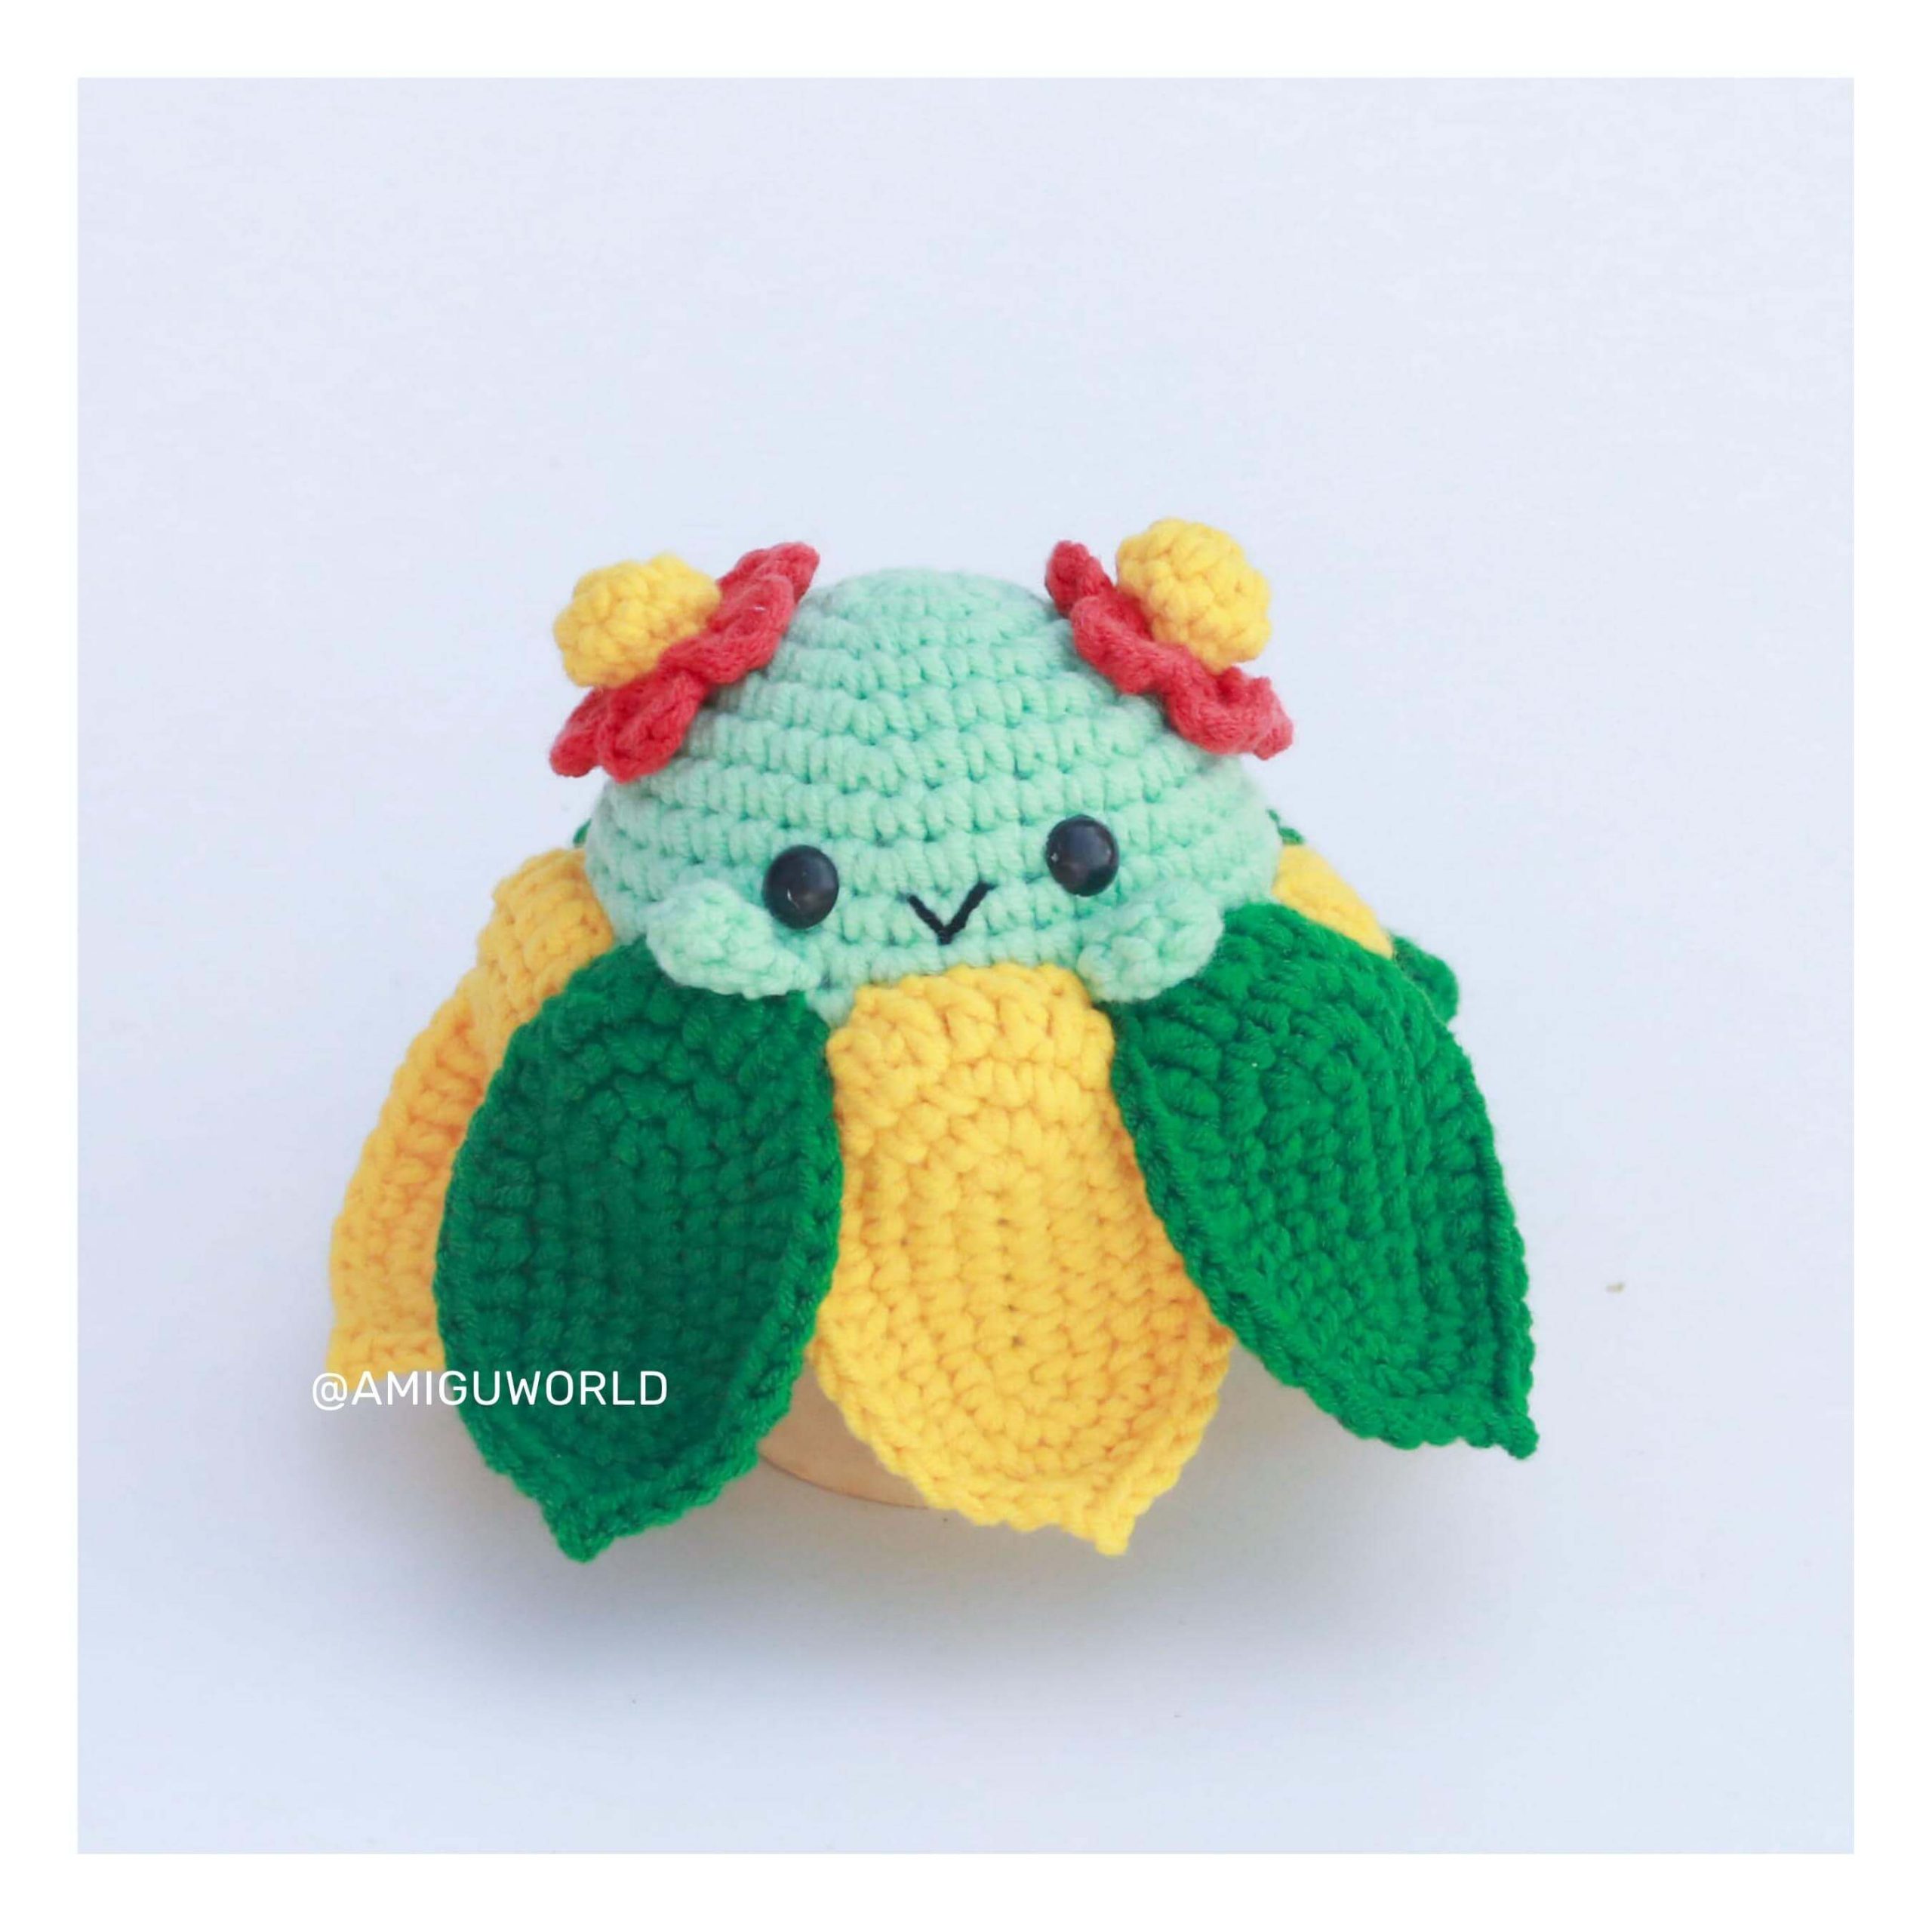 kireihana-amigurumi-crochet-pattern-by-amiguworld (1)